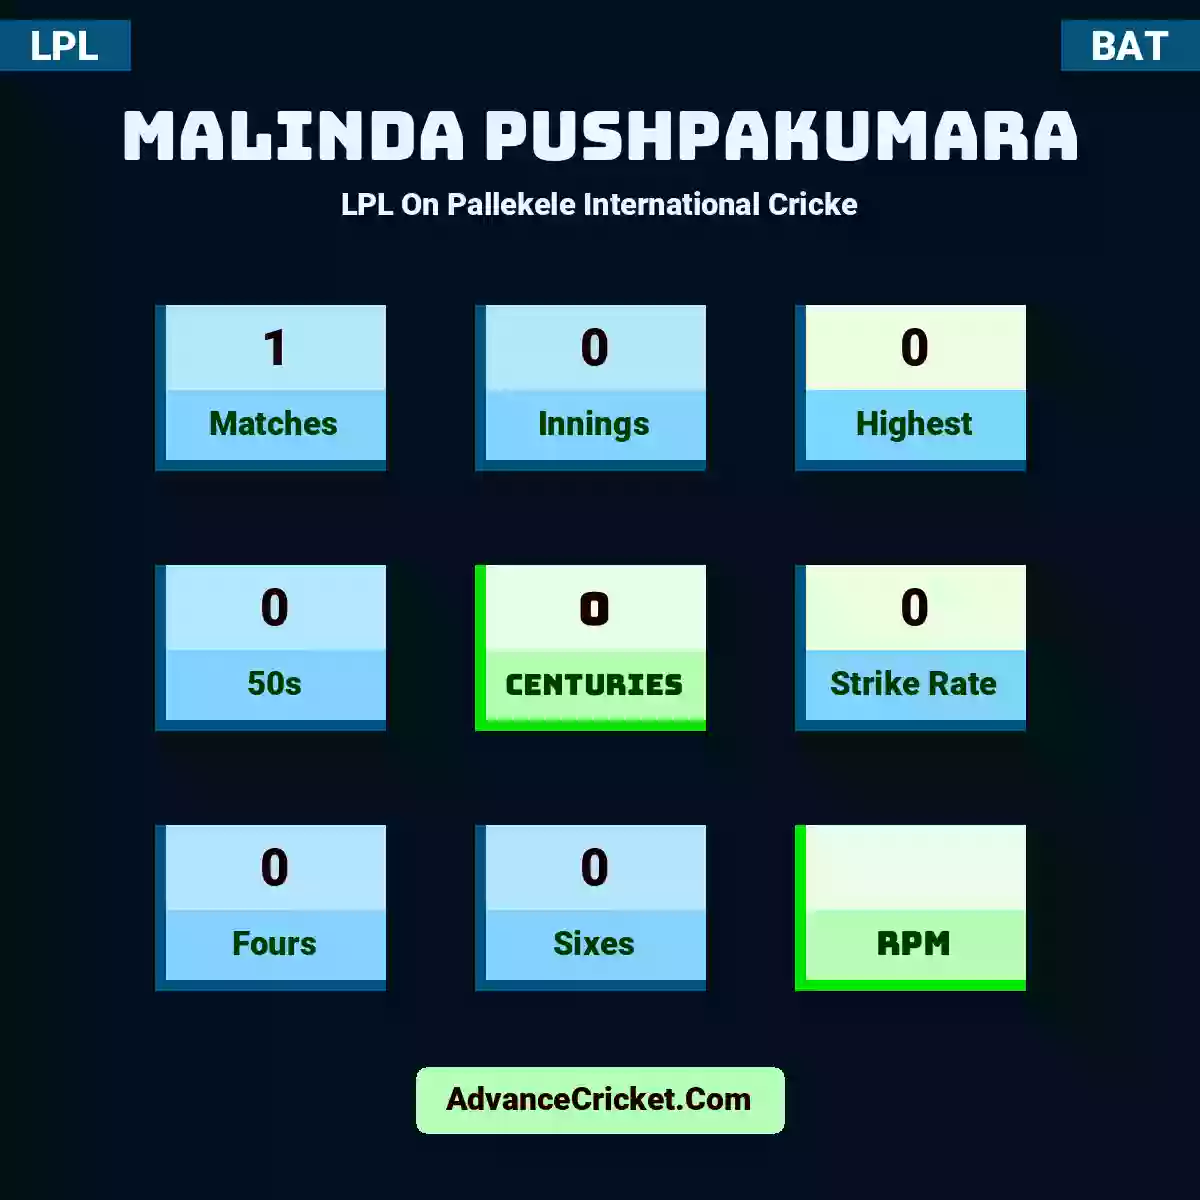 Malinda Pushpakumara LPL  On Pallekele International Cricke, Malinda Pushpakumara played 1 matches, scored 0 runs as highest, 0 half-centuries, and 0 centuries, with a strike rate of 0. M.Pushpakumara hit 0 fours and 0 sixes.